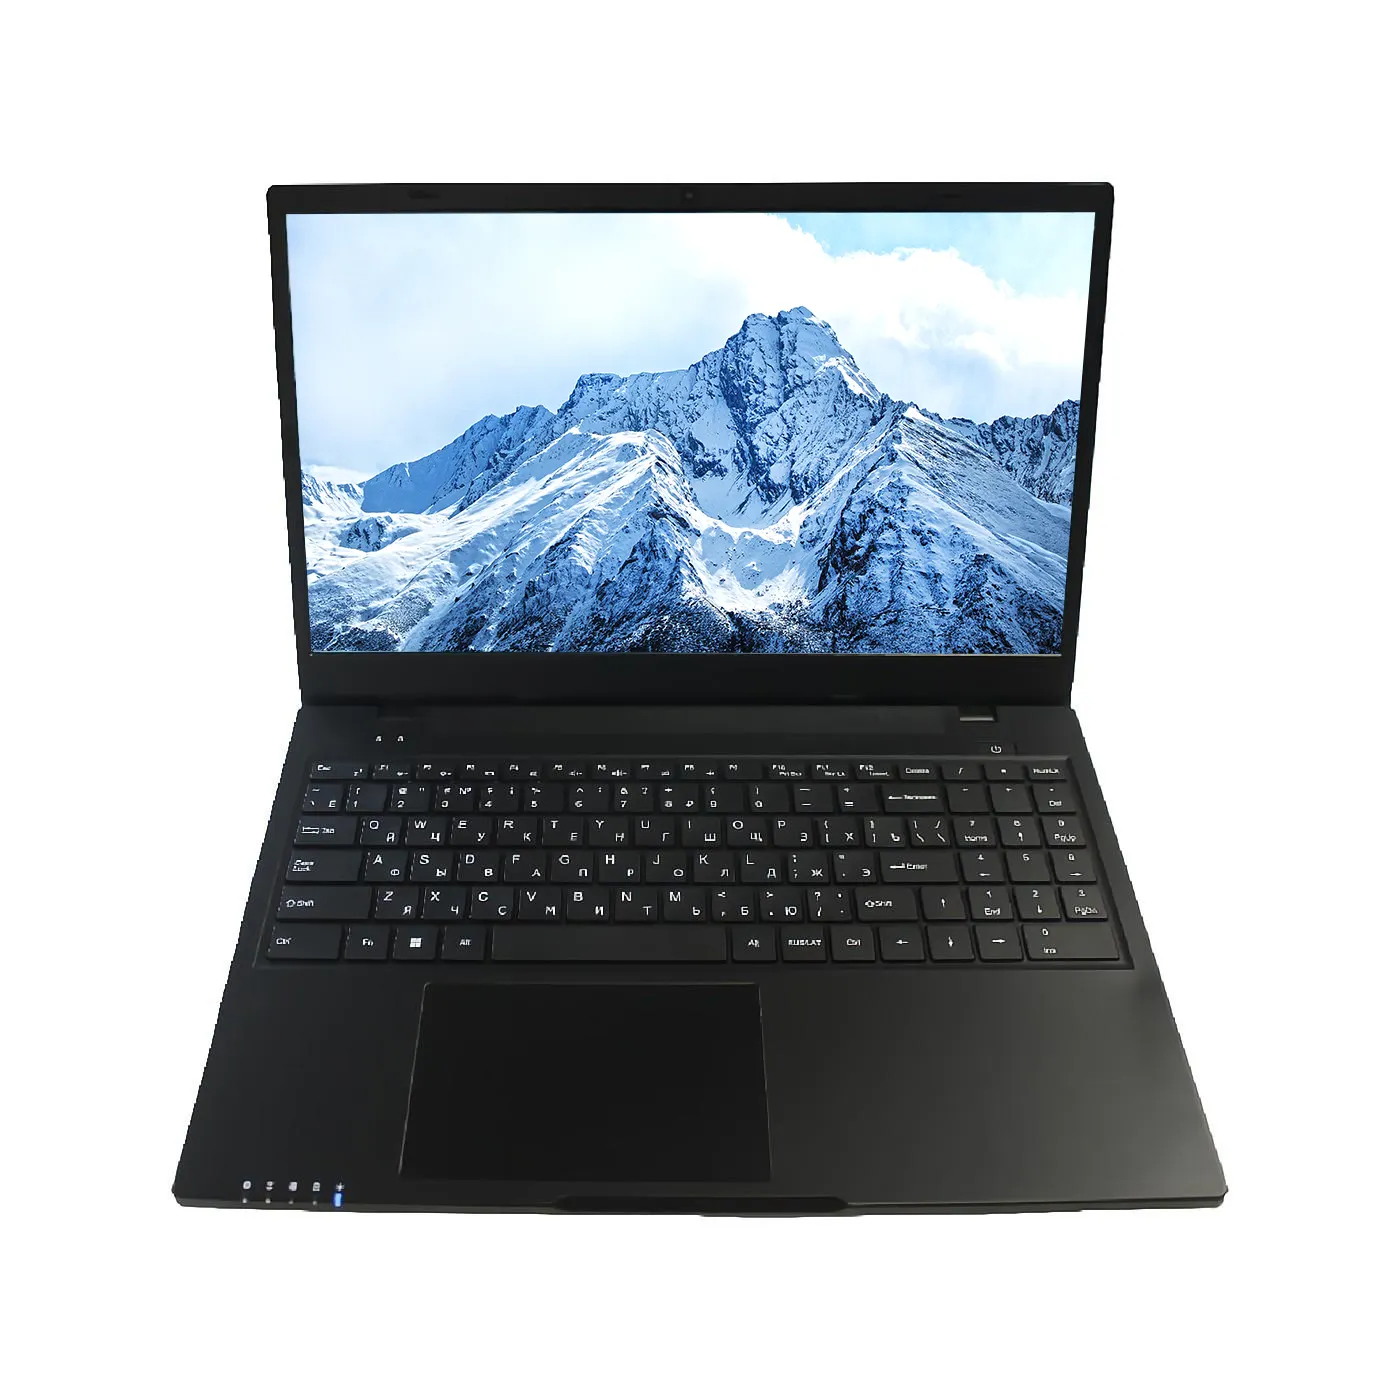 Laptop 15.6 inci HD Ultra tipis, komputer Laptop 256GB Dual Core Wins11 dengan harga termurah